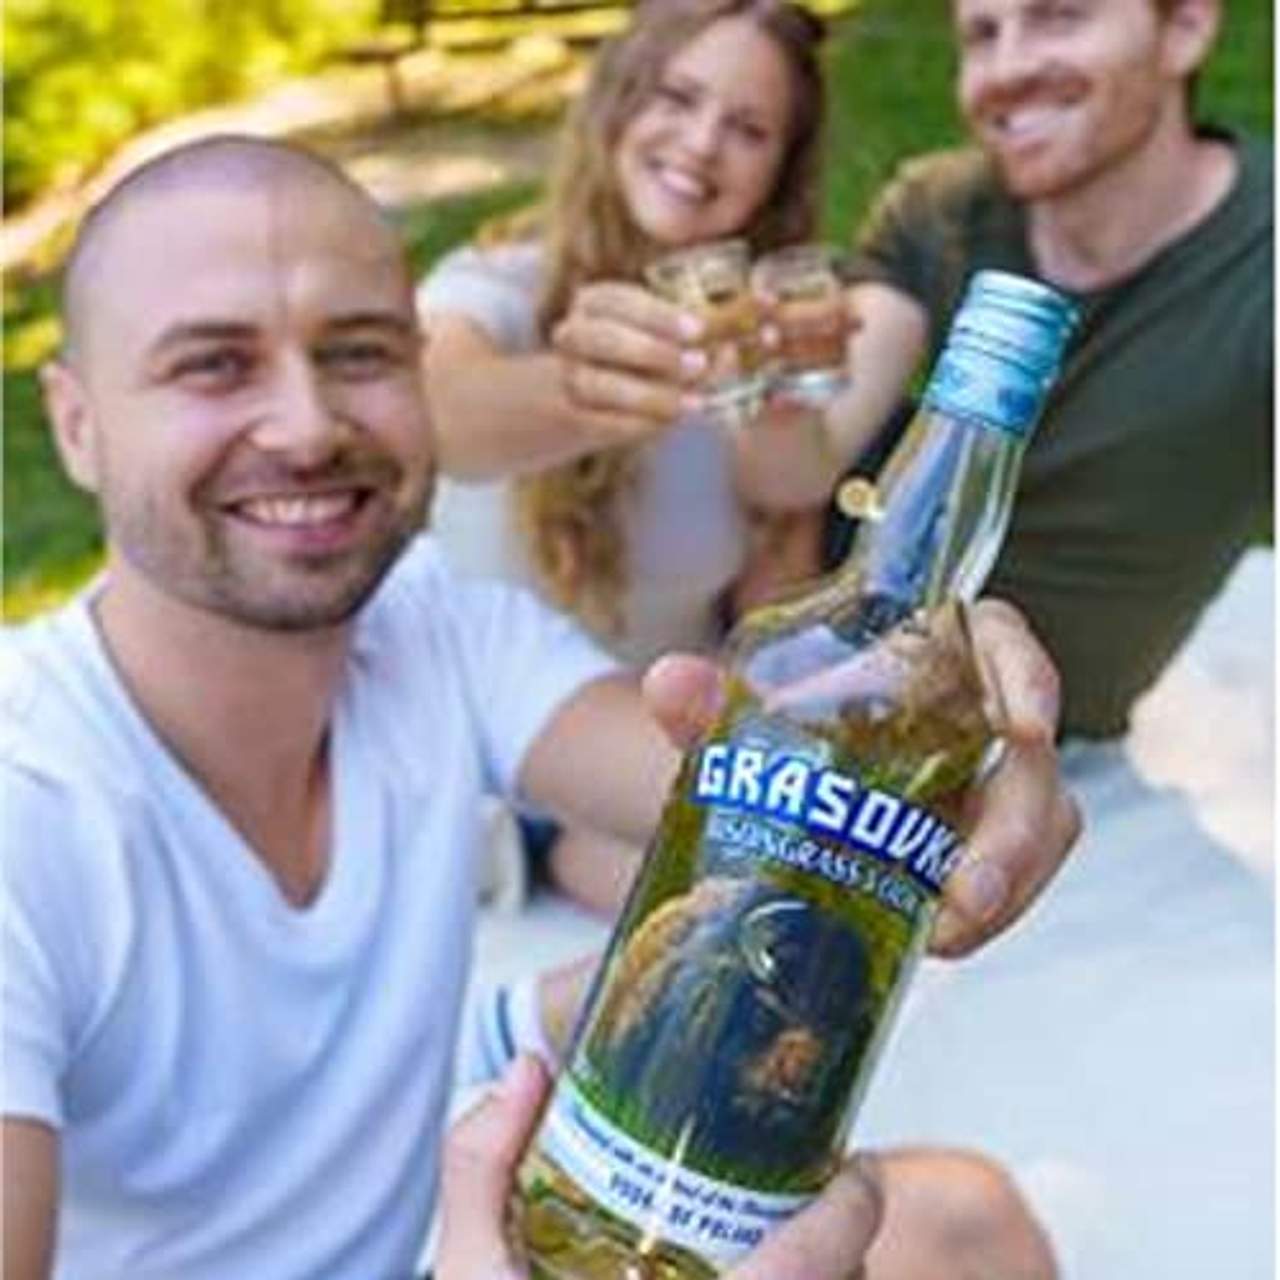 Grasovka Bisongrass Vodka